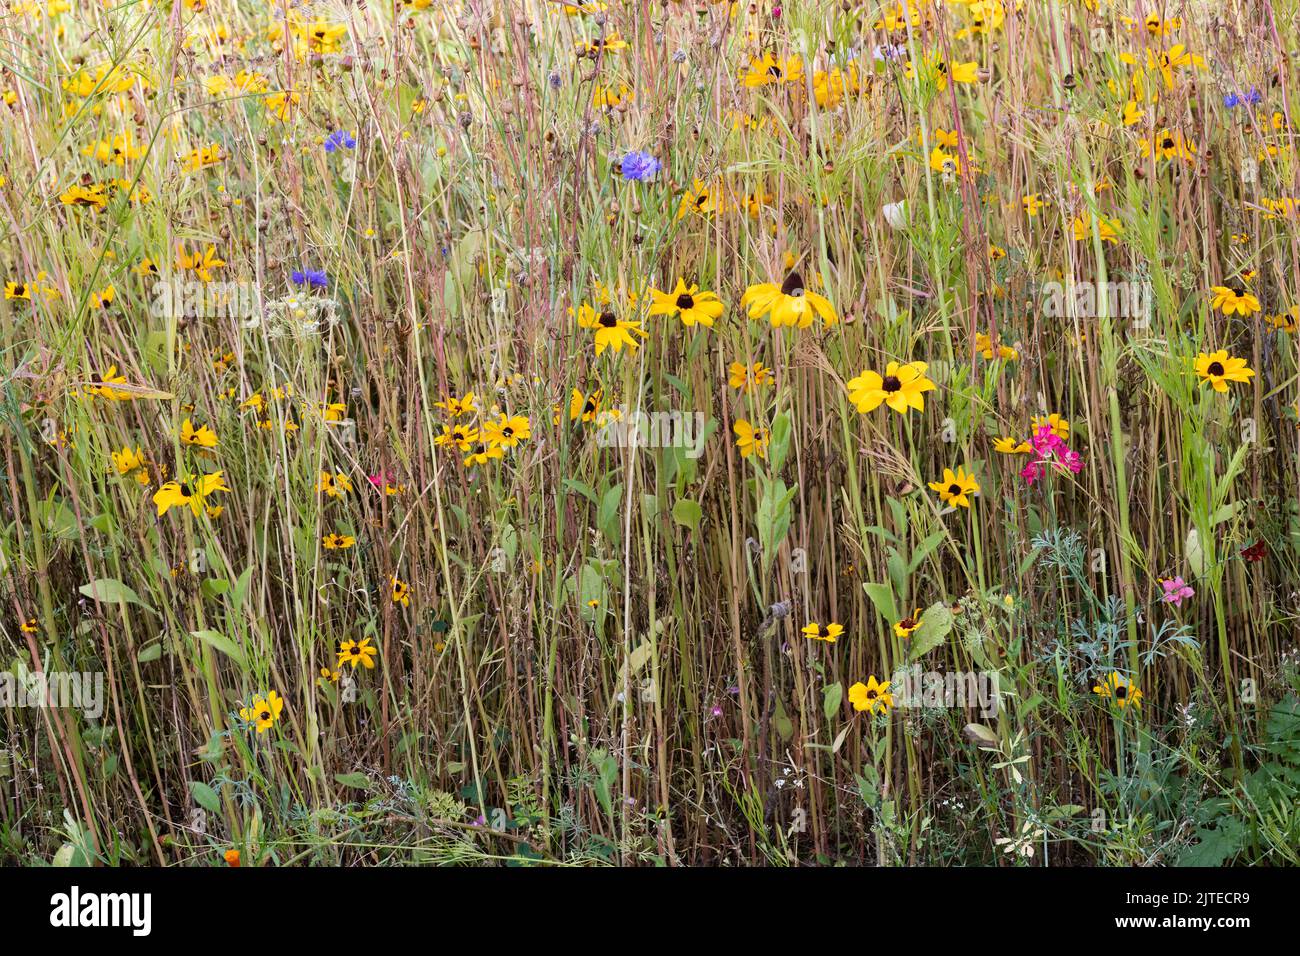 Rudbeckia. Coneflowers in a spent wildflower garden. uk Stock Photo